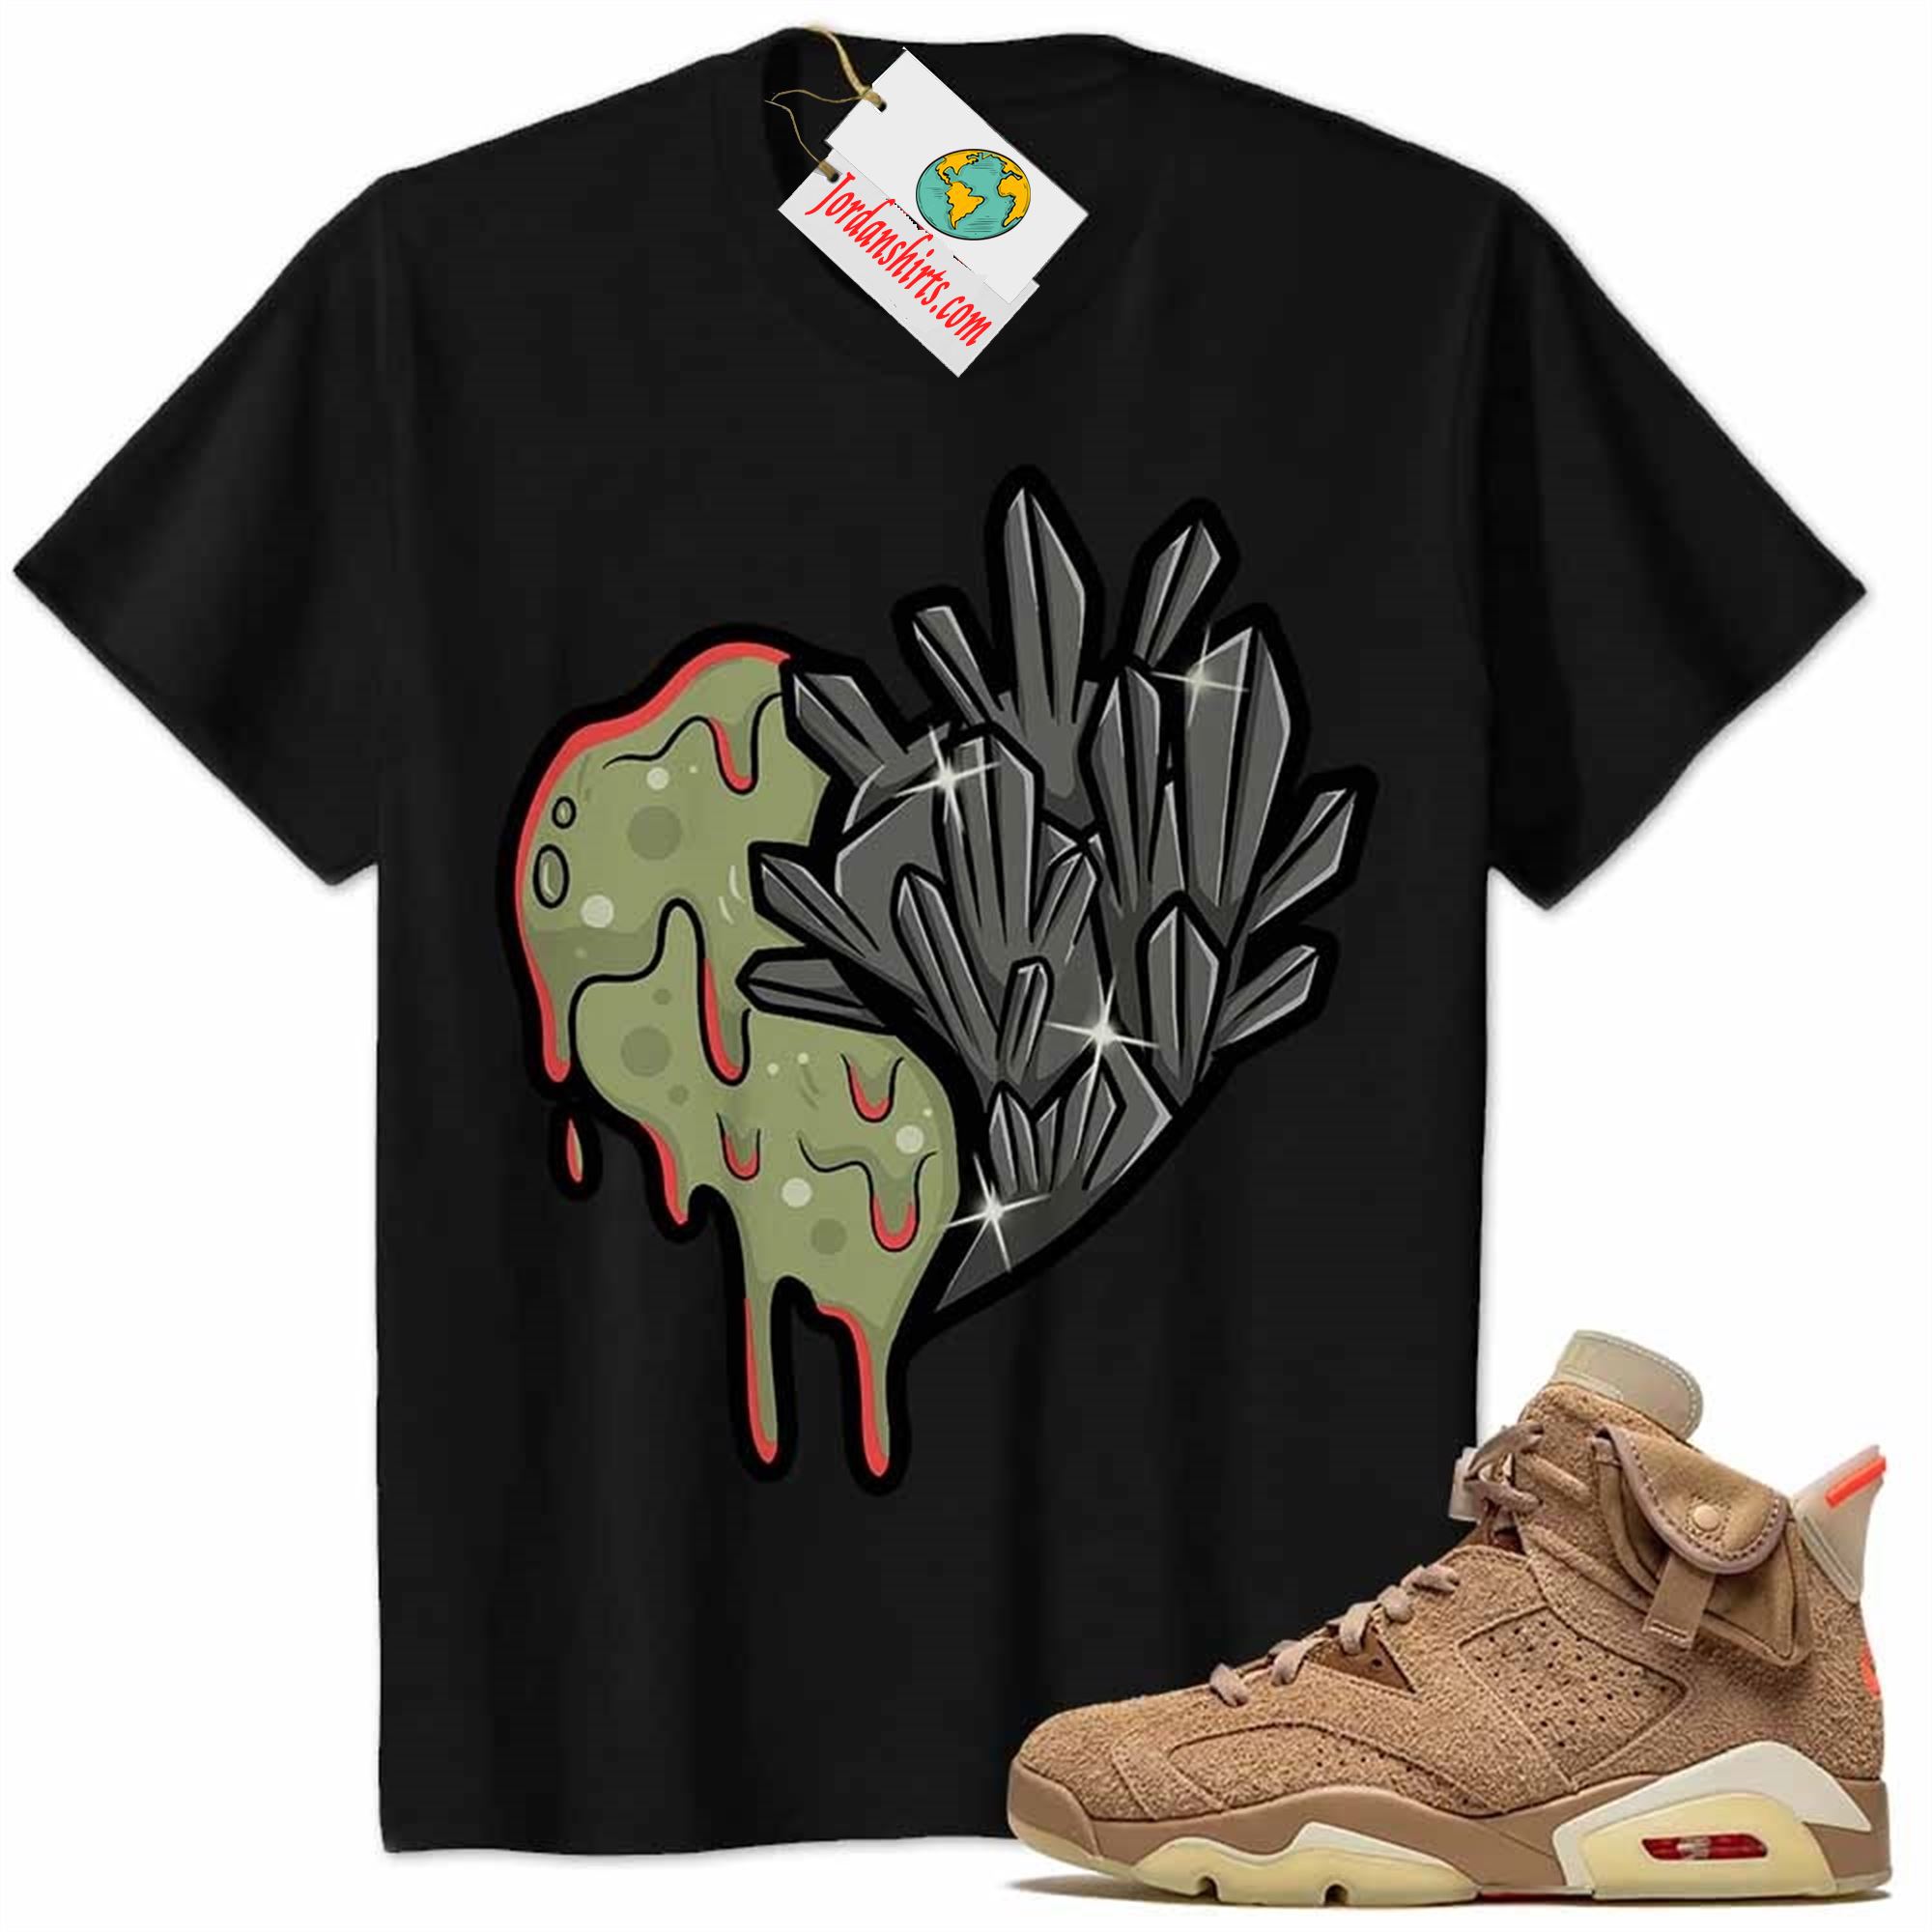 Jordan 6 Shirt, Crystal And Melt Heart Black Air Jordan 6 Travis Scott 6s Full Size Up To 5xl